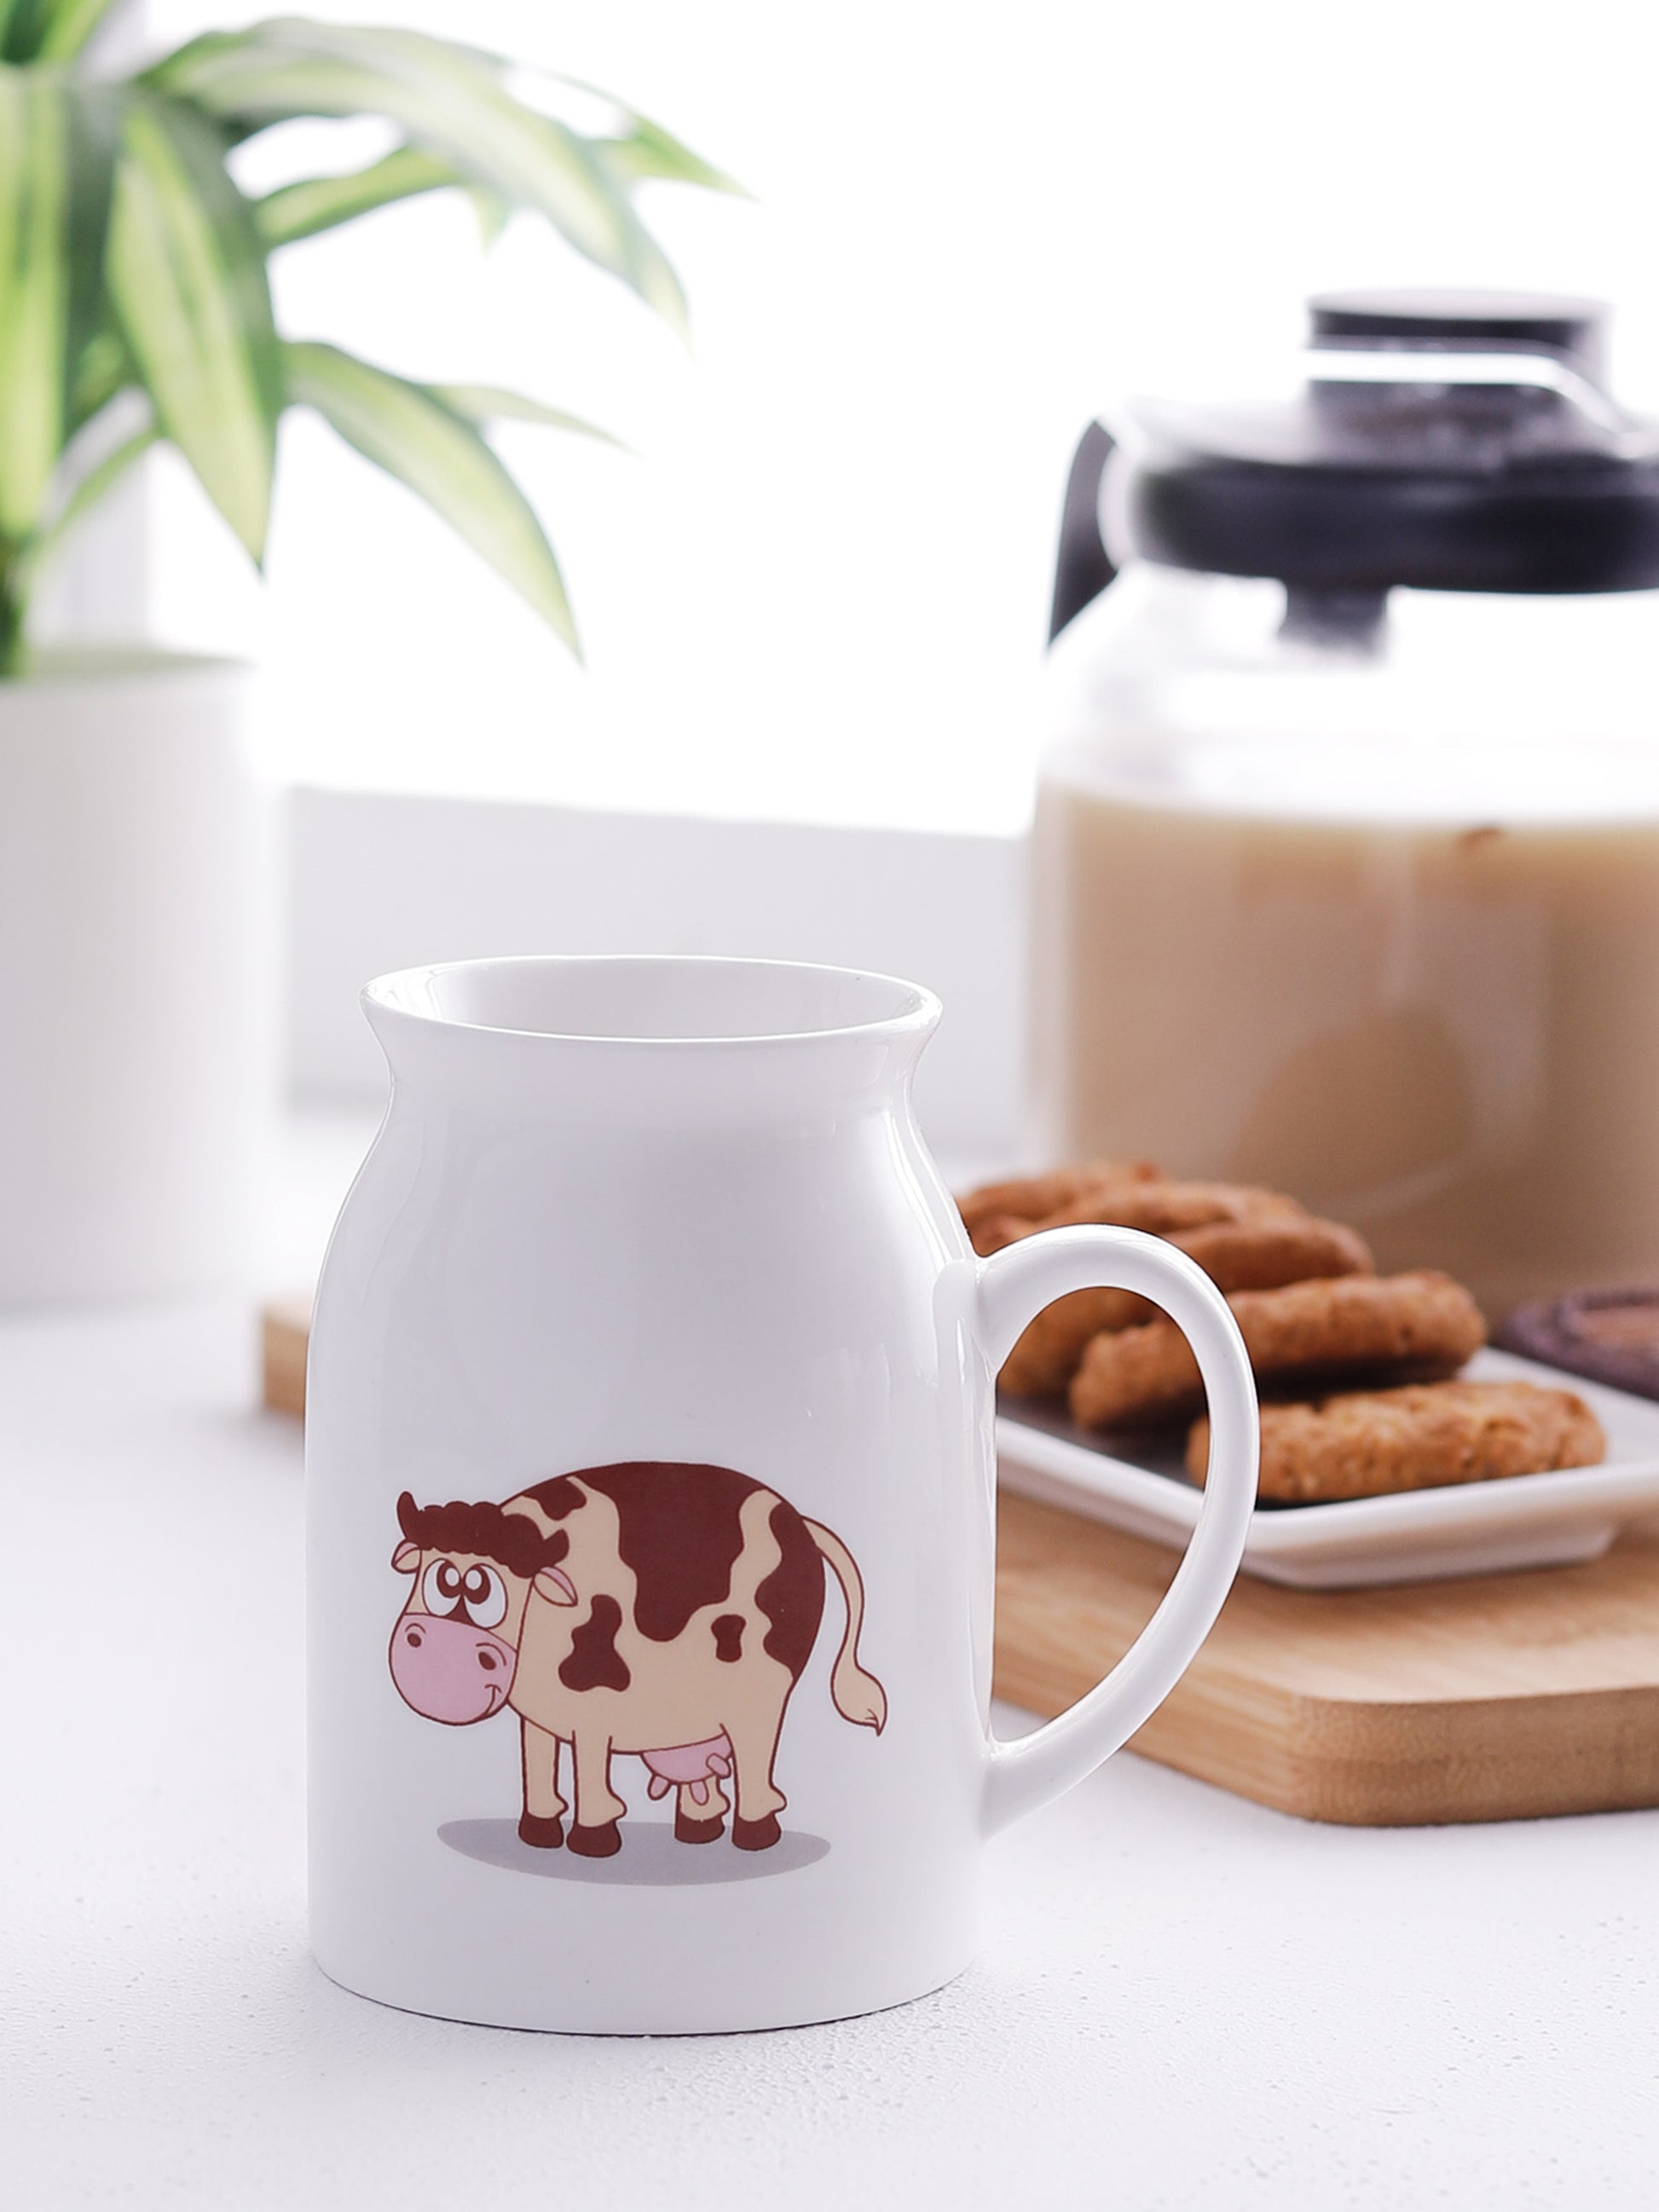 Cane Small Coffee & Milk Mug, 350ml, 1 Piece (S302) - Clay Craft India